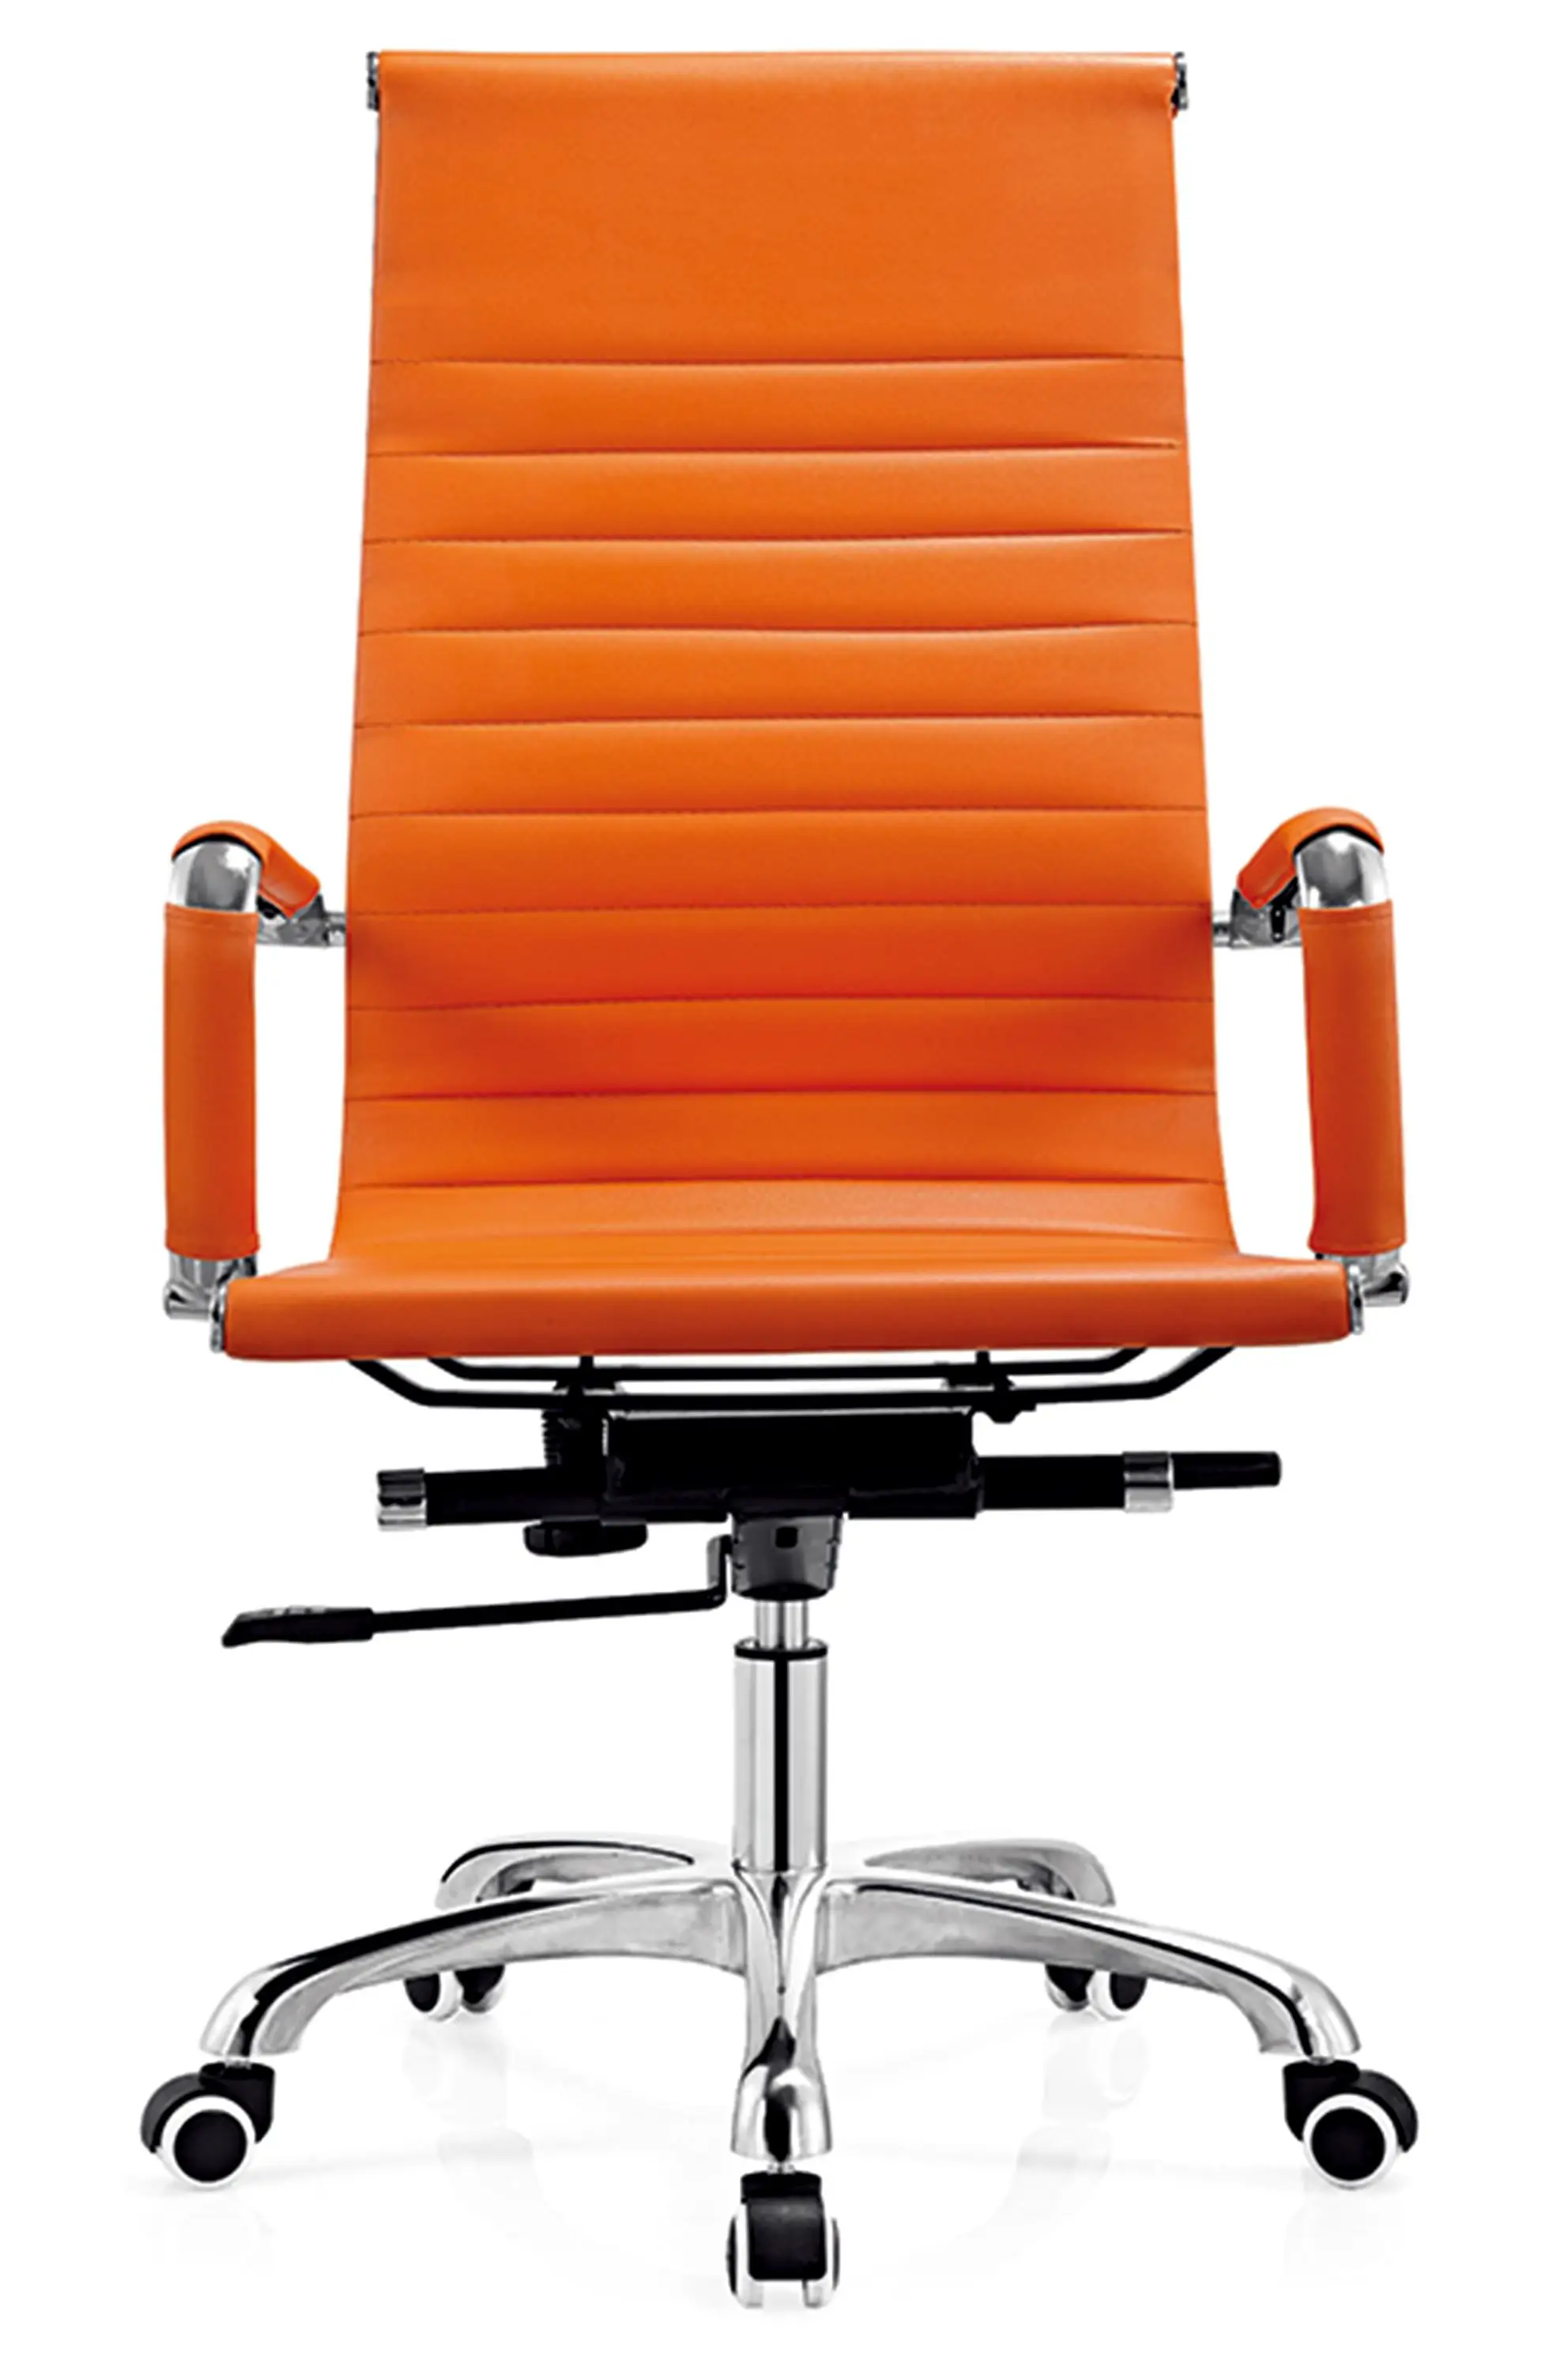 D818 High Back Orange Leather Ergonomic Executive 360 Swivel Bride